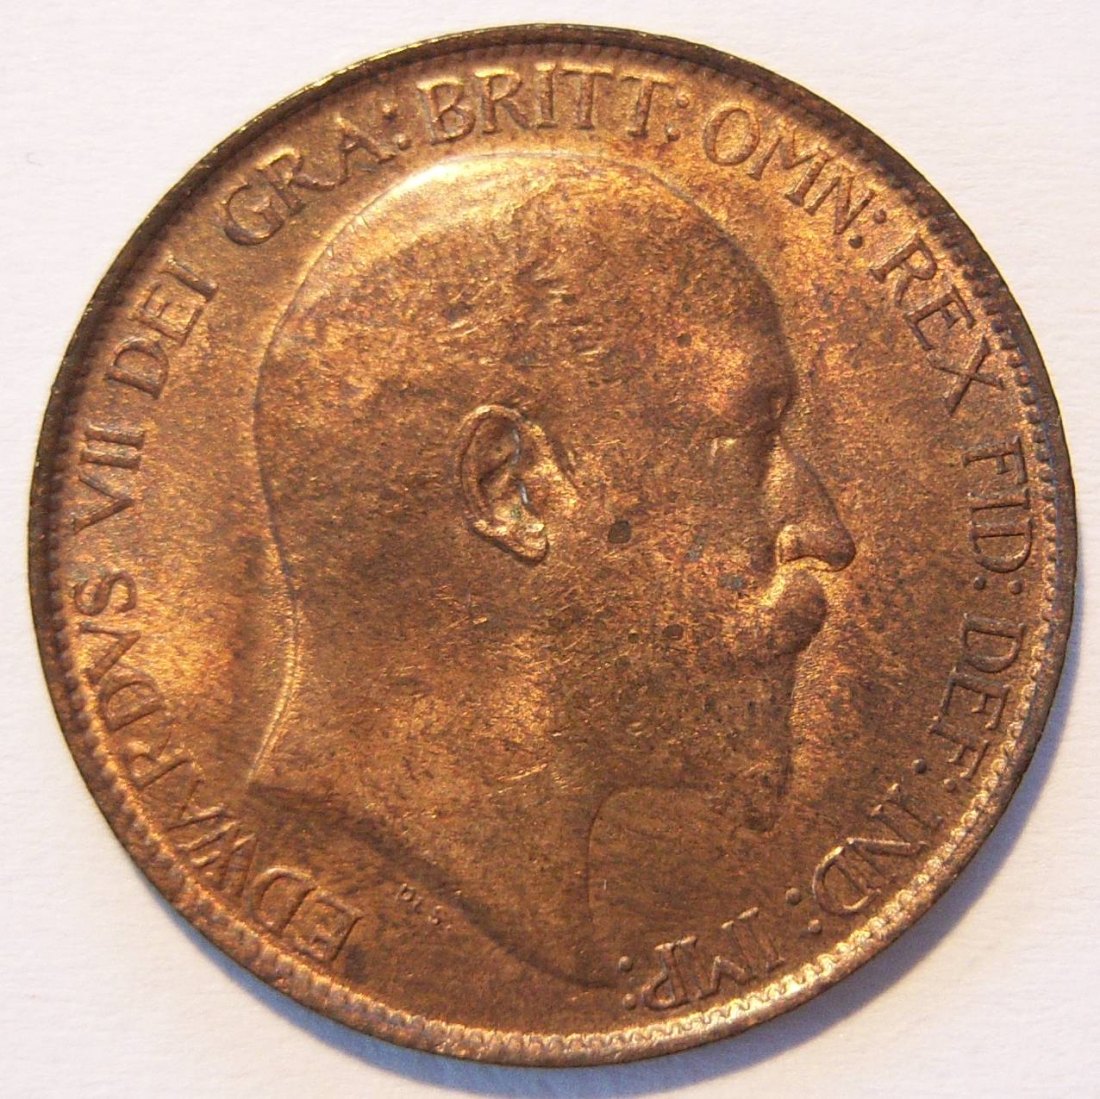  Grossbritannien 1/2 Half Penny 1907 ERHALTUNG !!   